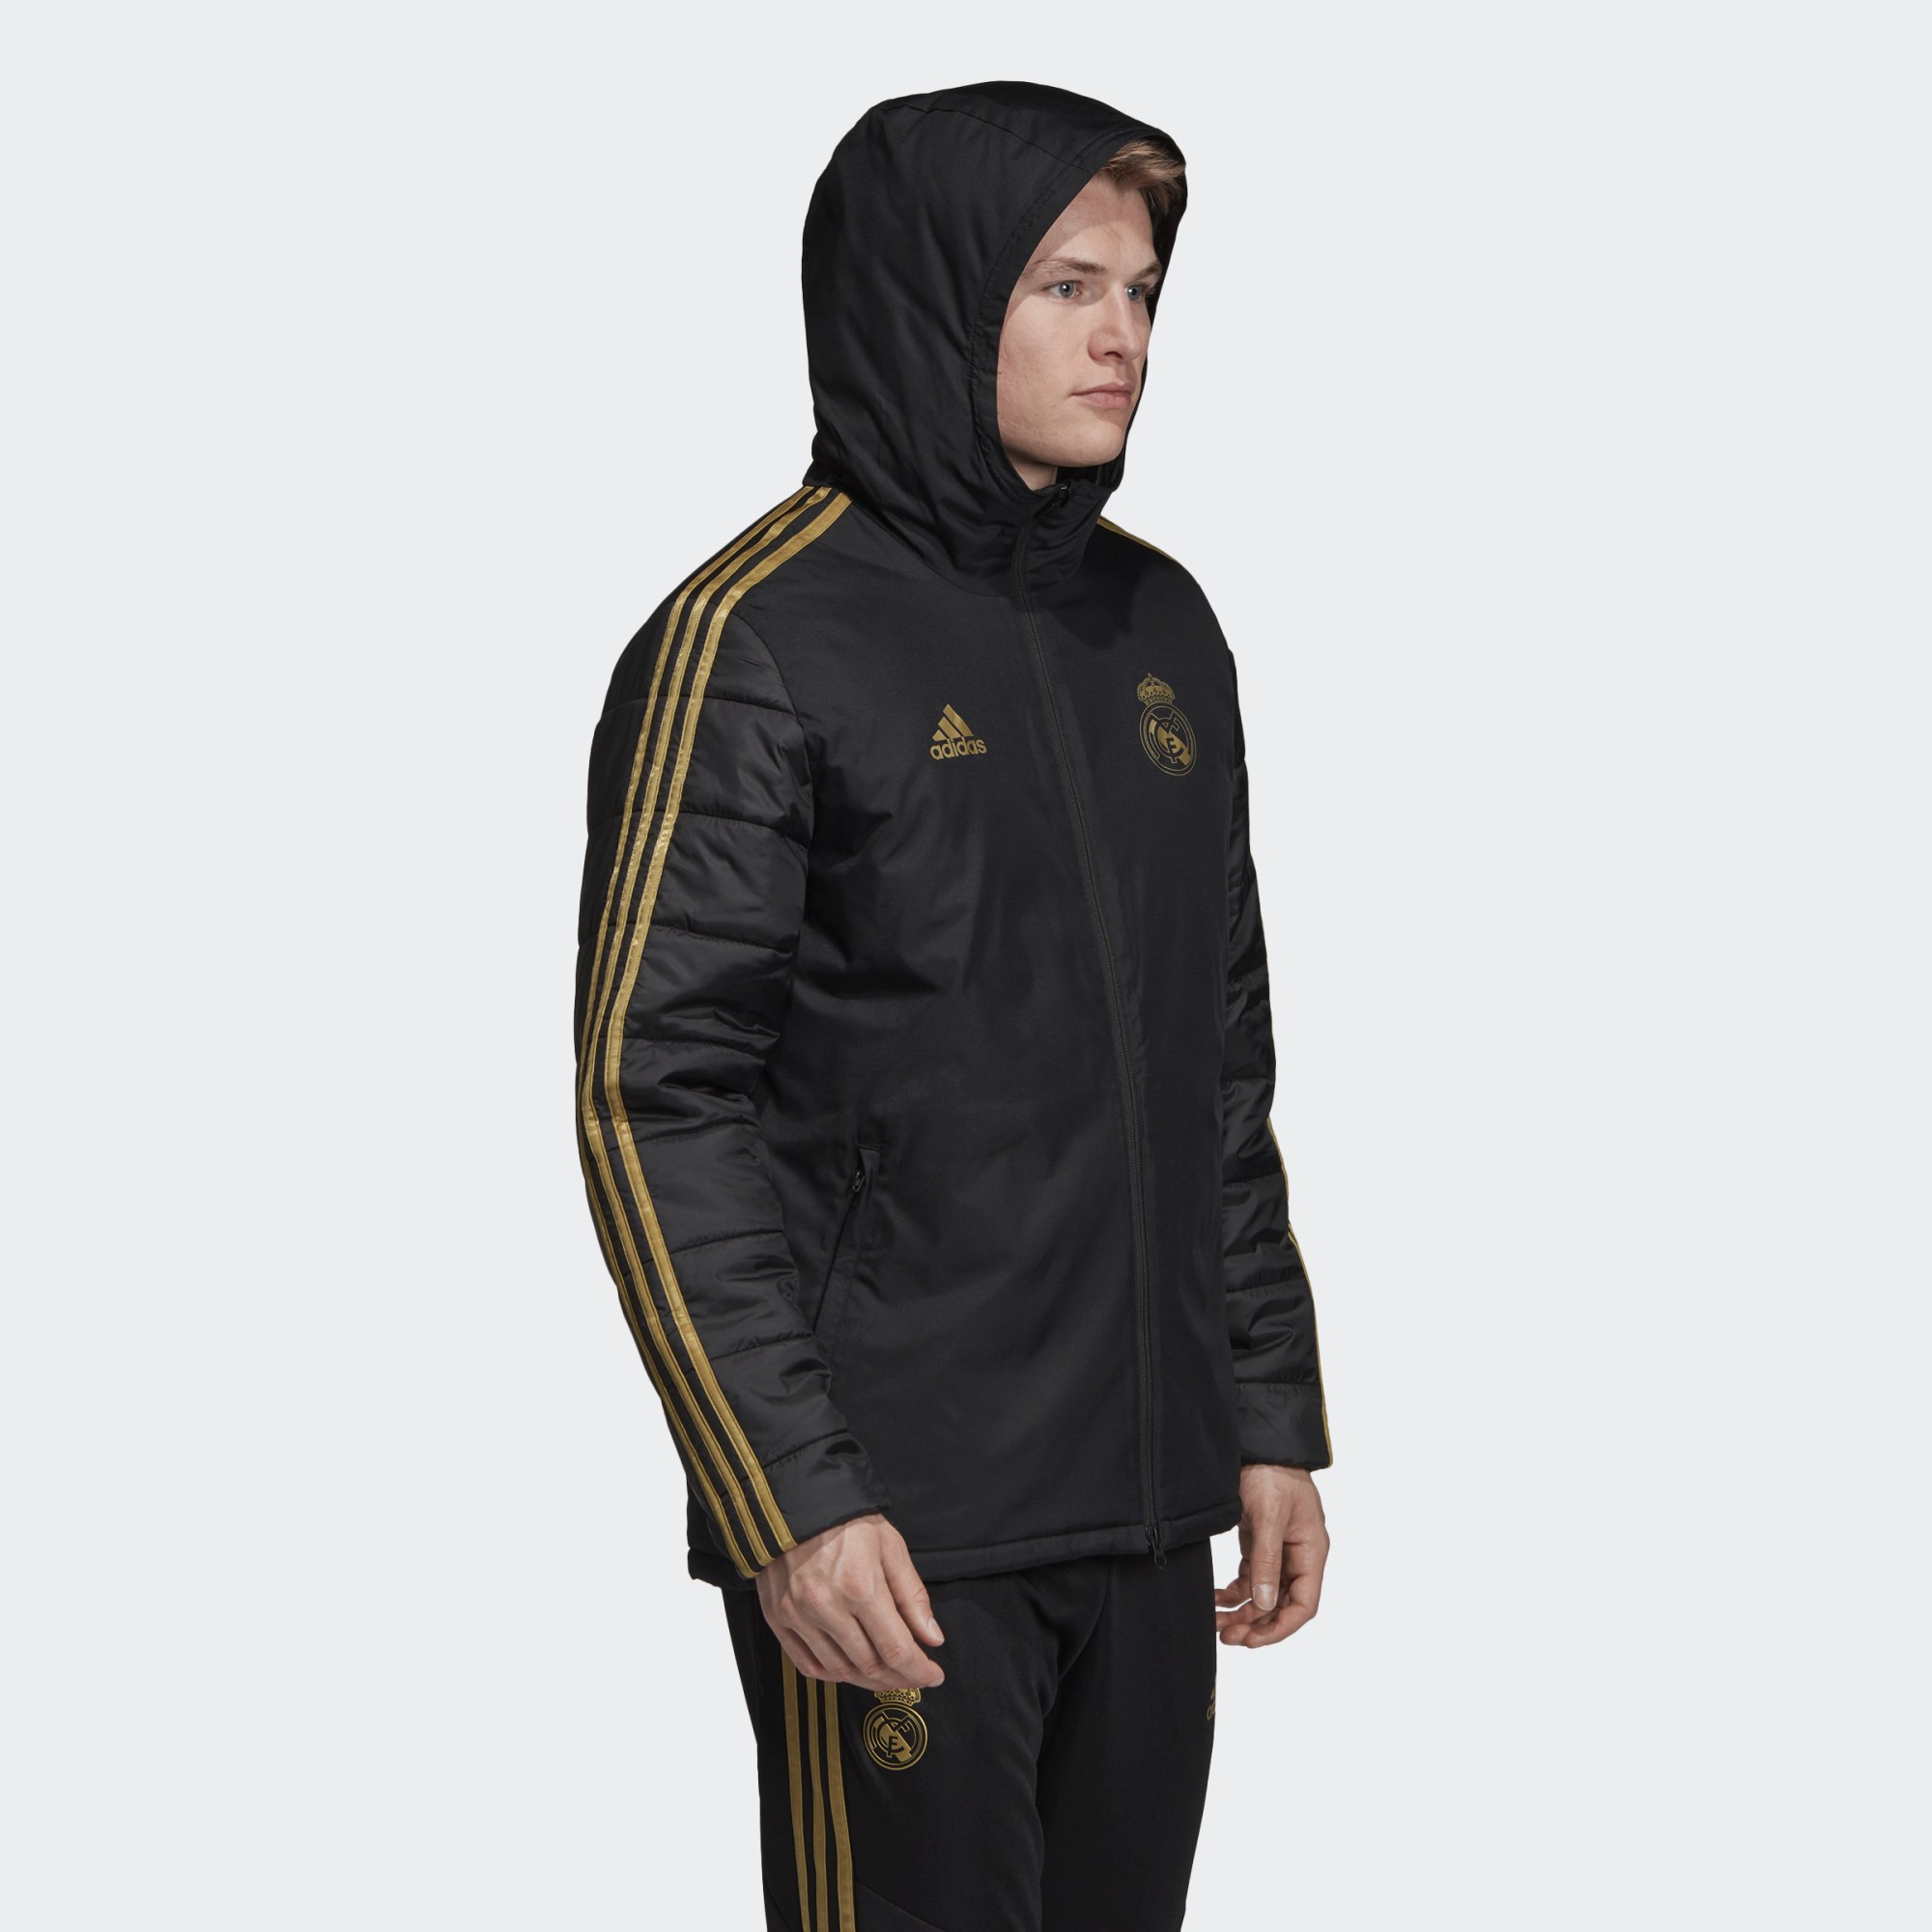 Adidas 2019-20 Real Madrid Winter Jacket - Black / Dark Football Gold ...